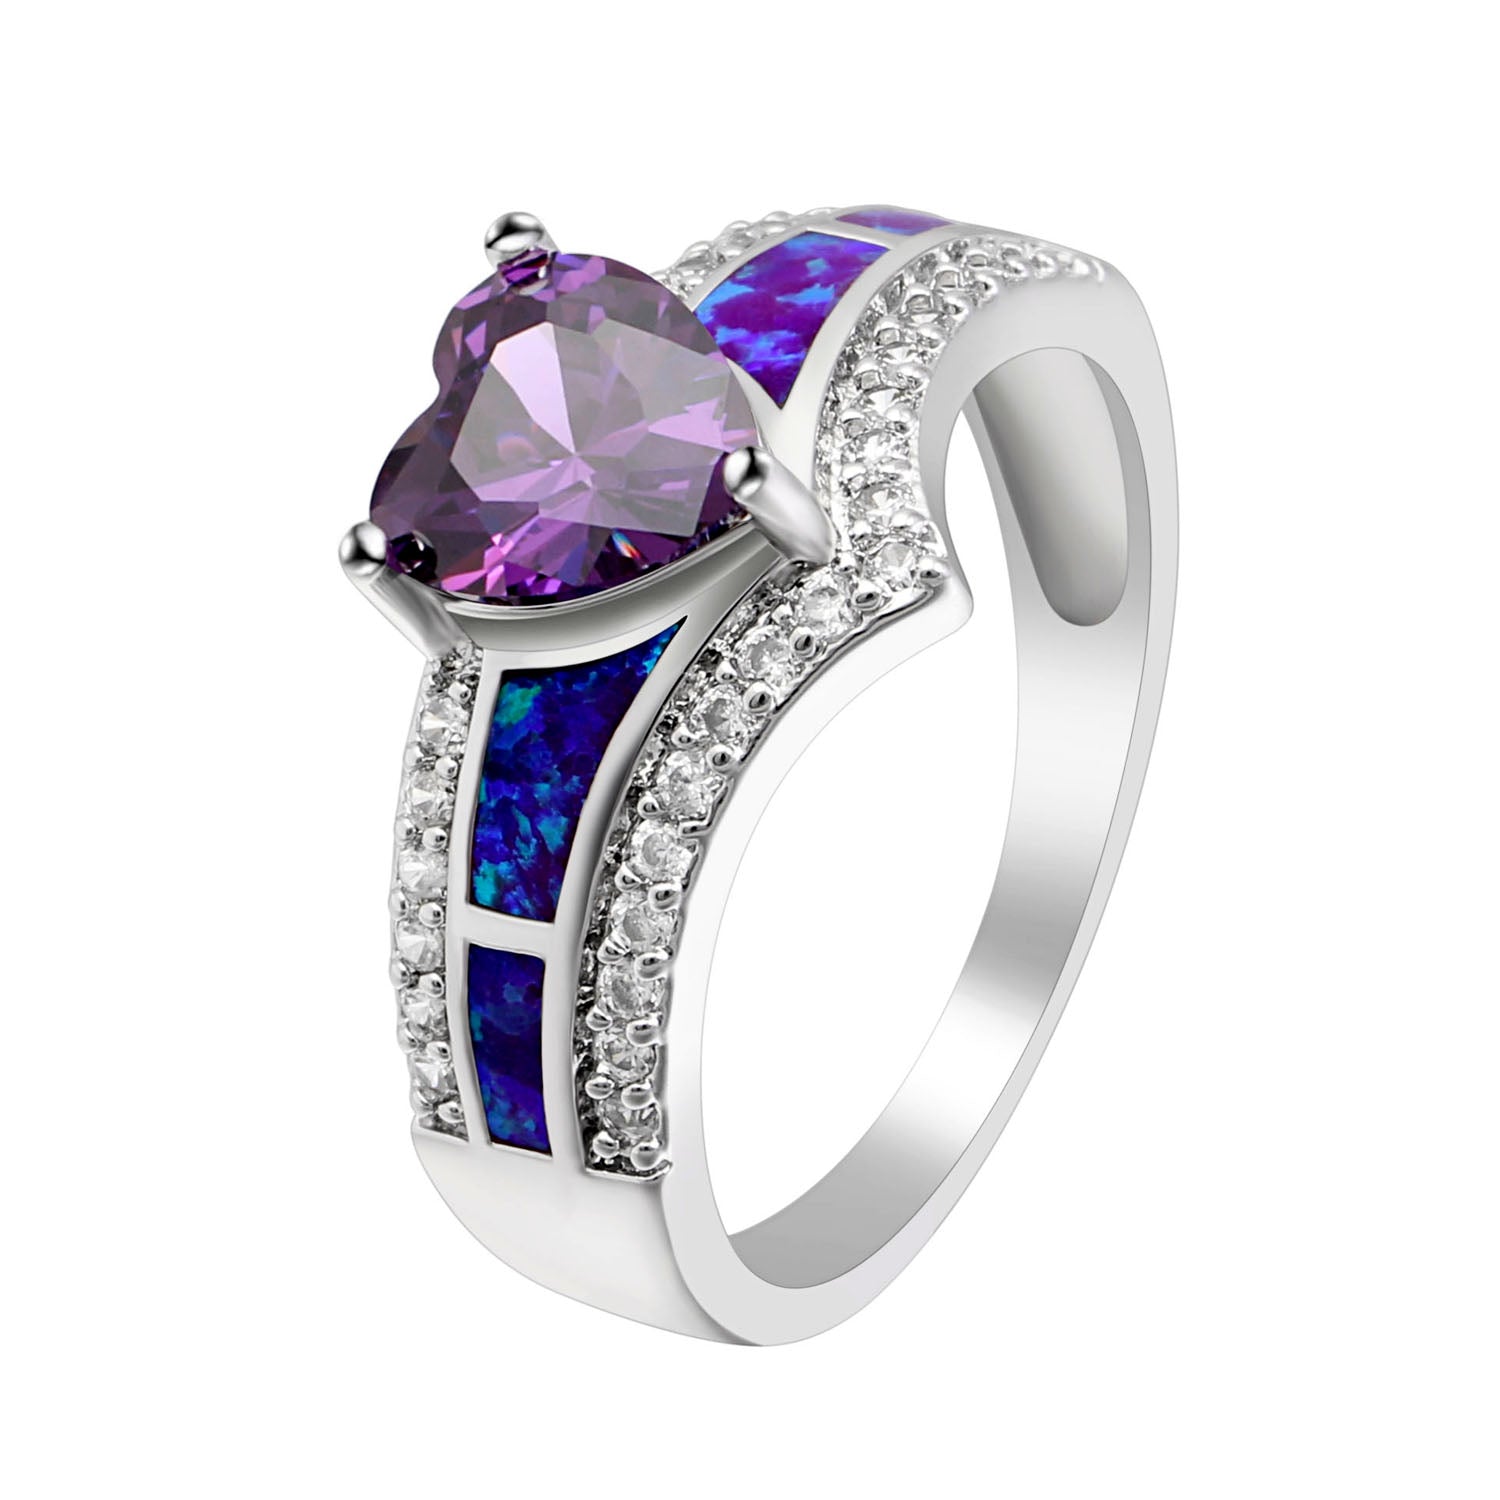 Majestic Heart Cz Promise Ring Created Fire Opal Girl Women Ginger Lyne - Purple,7